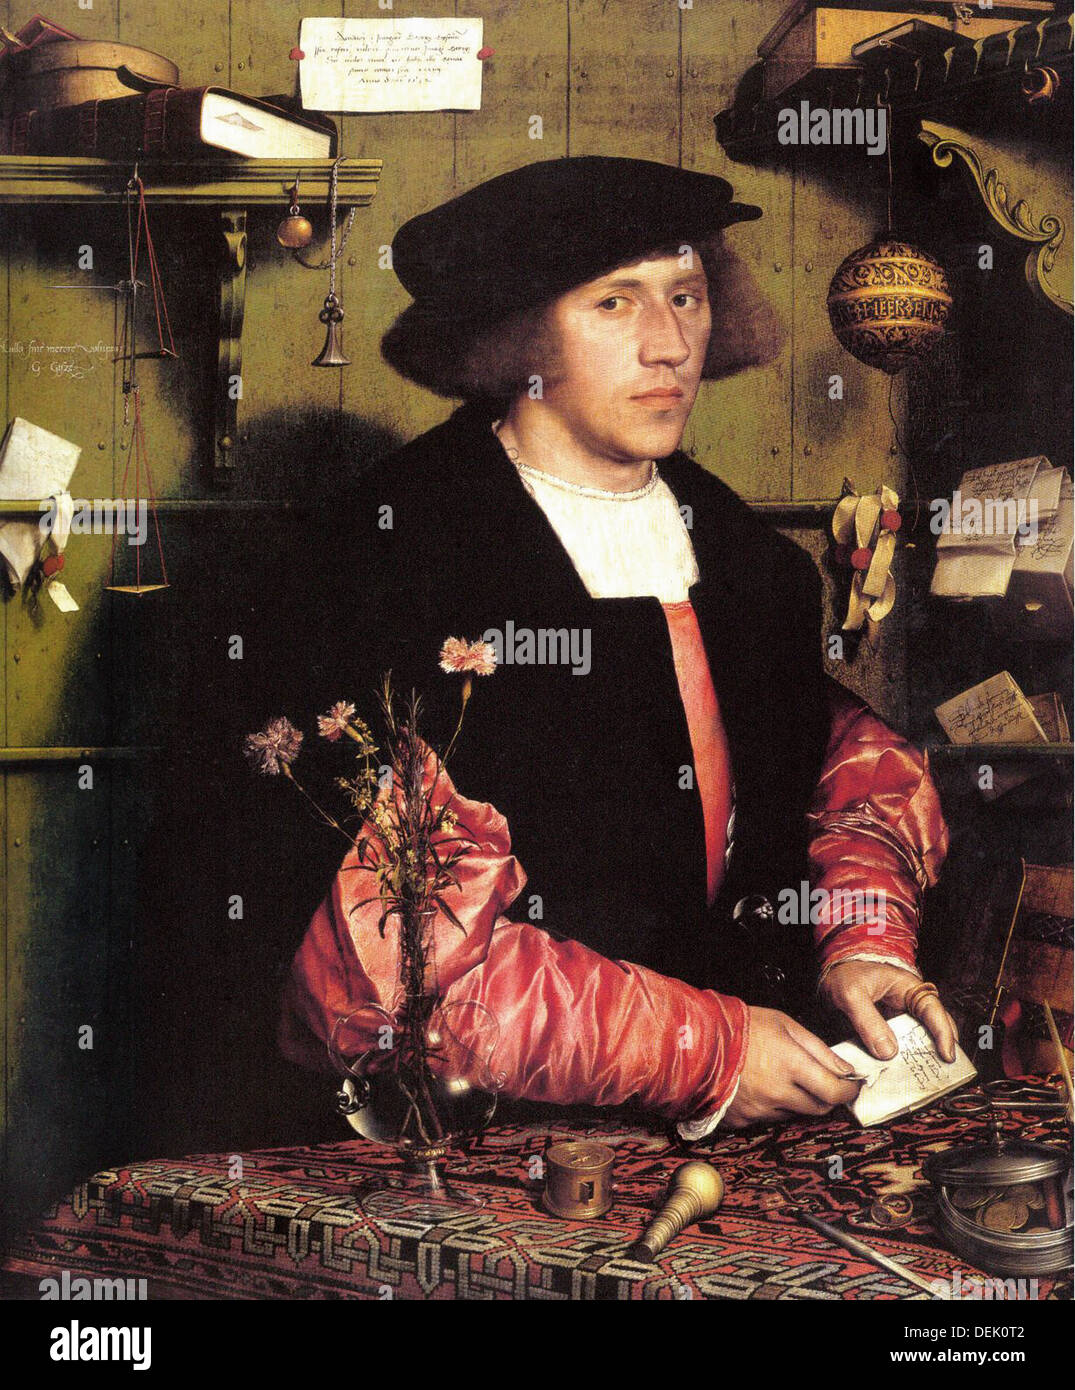 Hans Holbein - le marchand Georg Gisze - 1532 - Gemaldegalerie, Berlin Banque D'Images